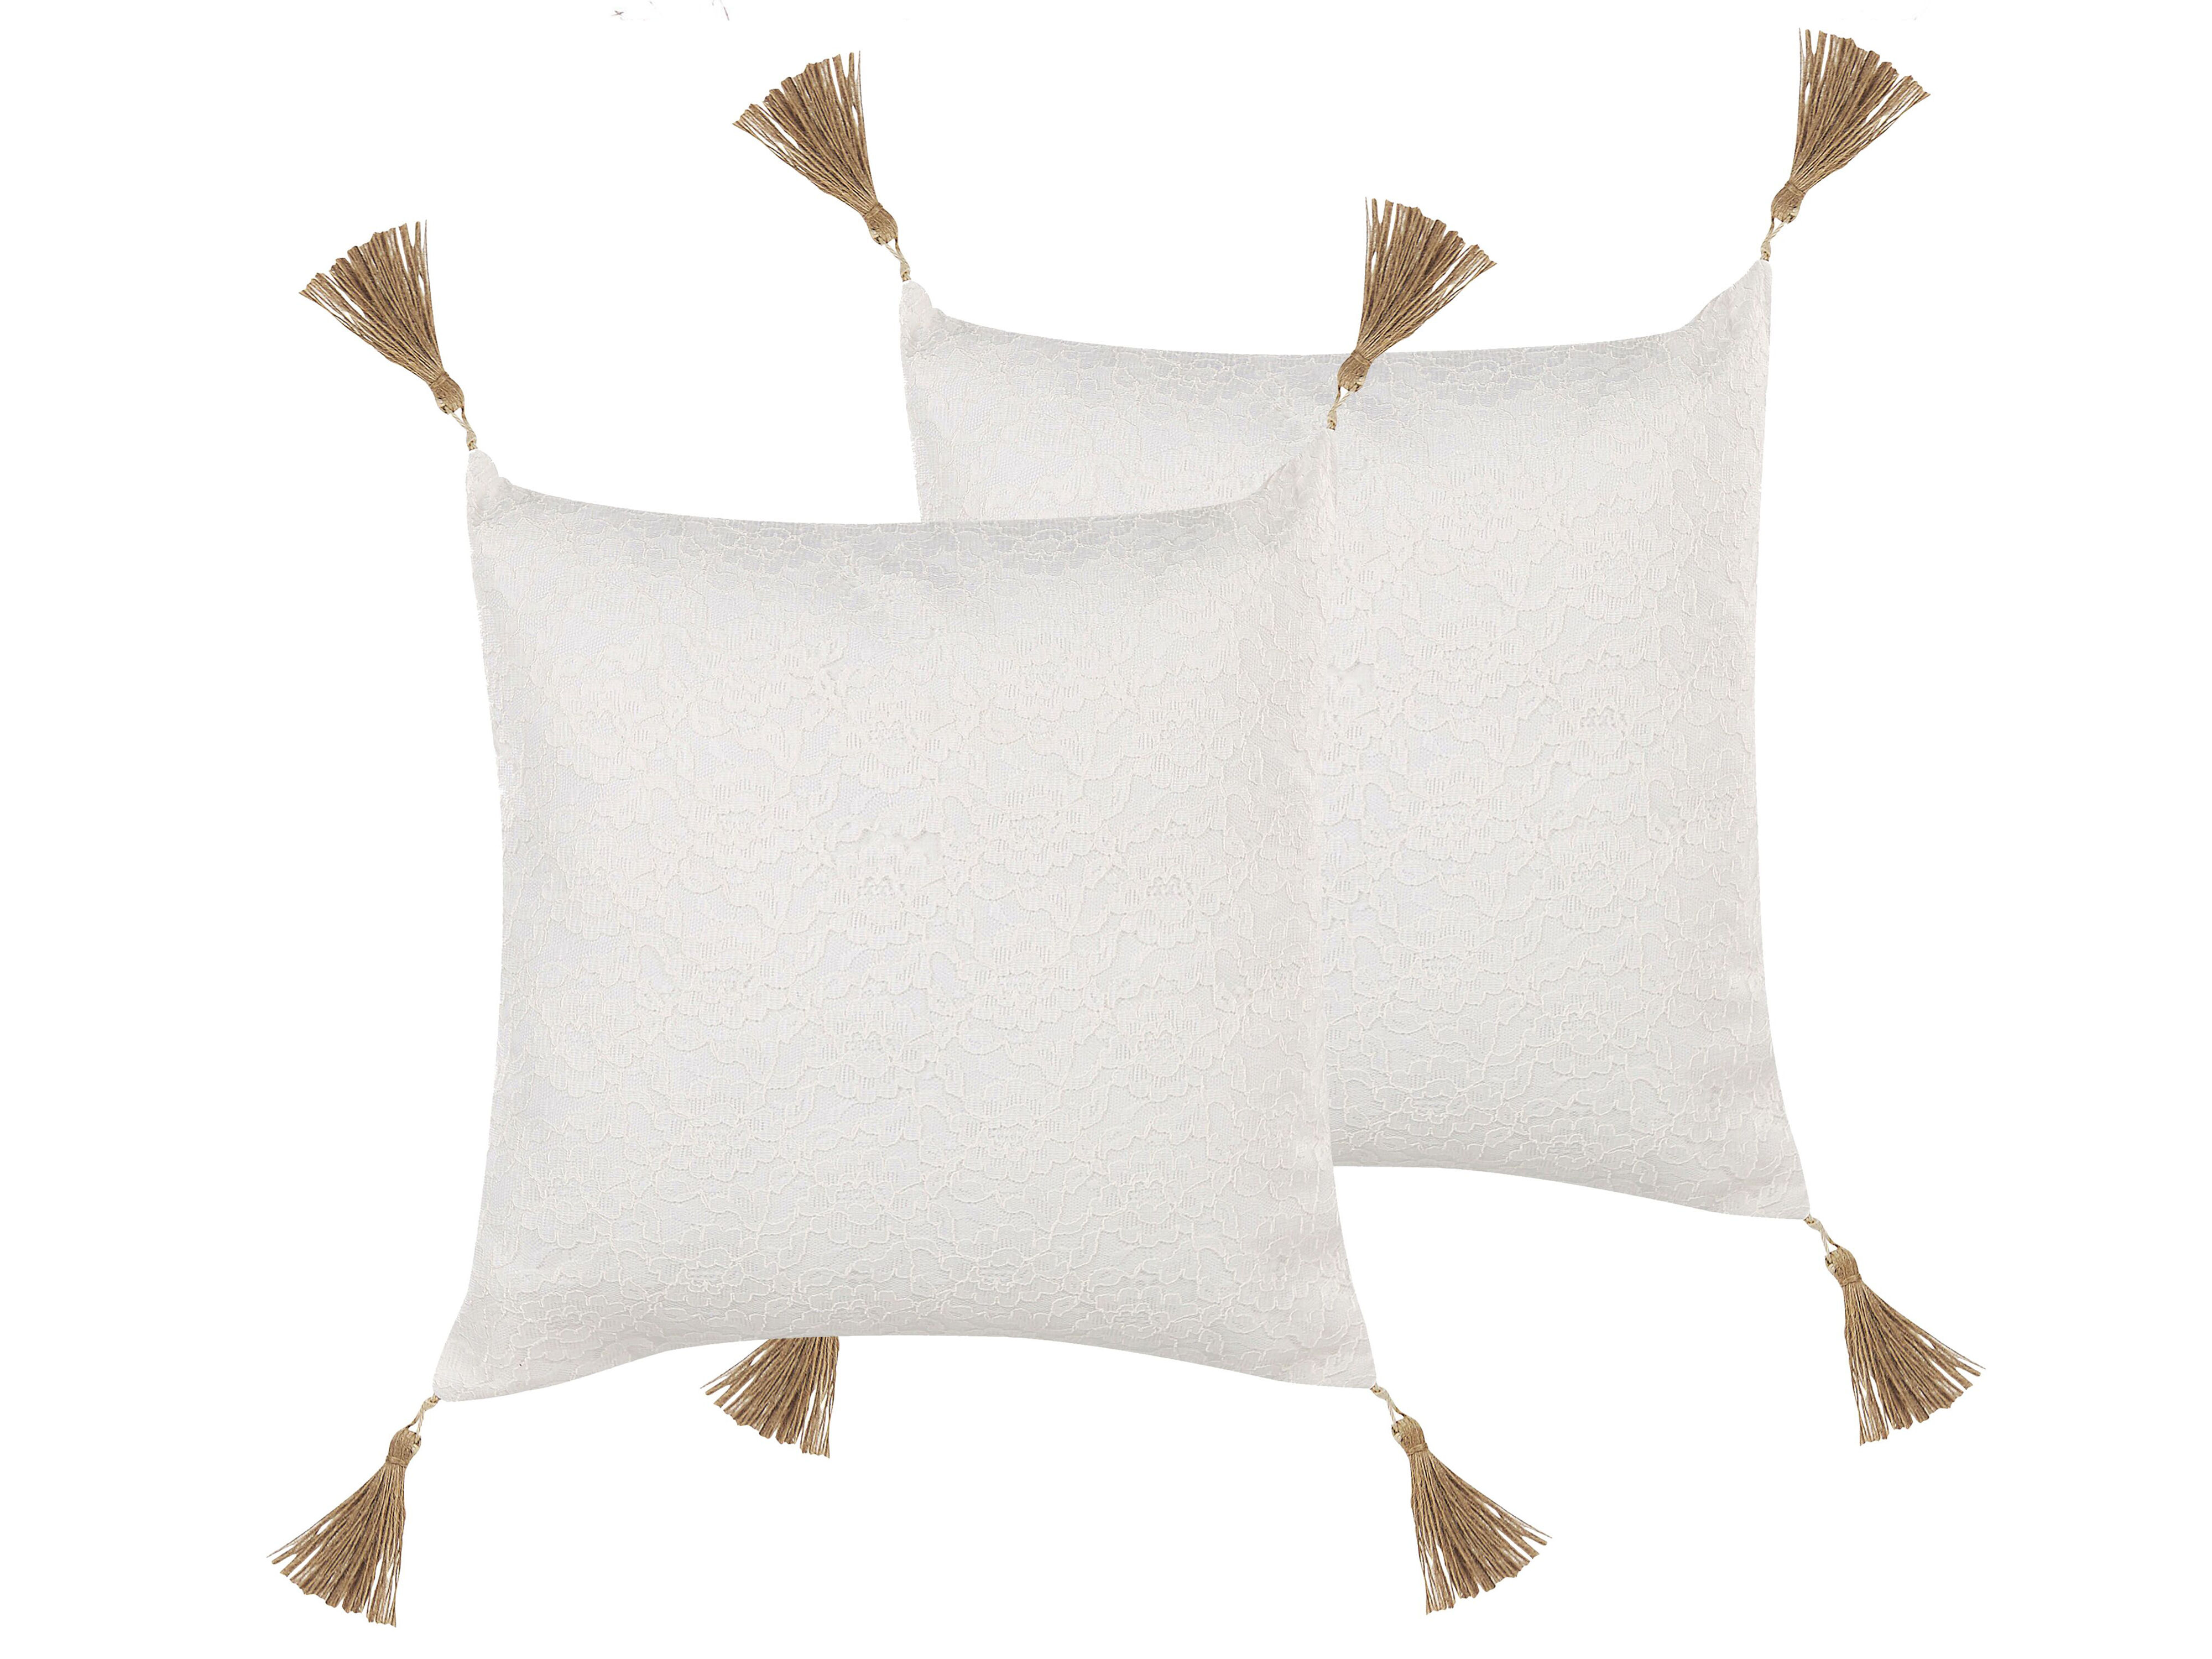 Beliani Set of 2 Decorative Cushions White Lace Floral Motif 45 x 45 cm with Tassels Décor Accessories